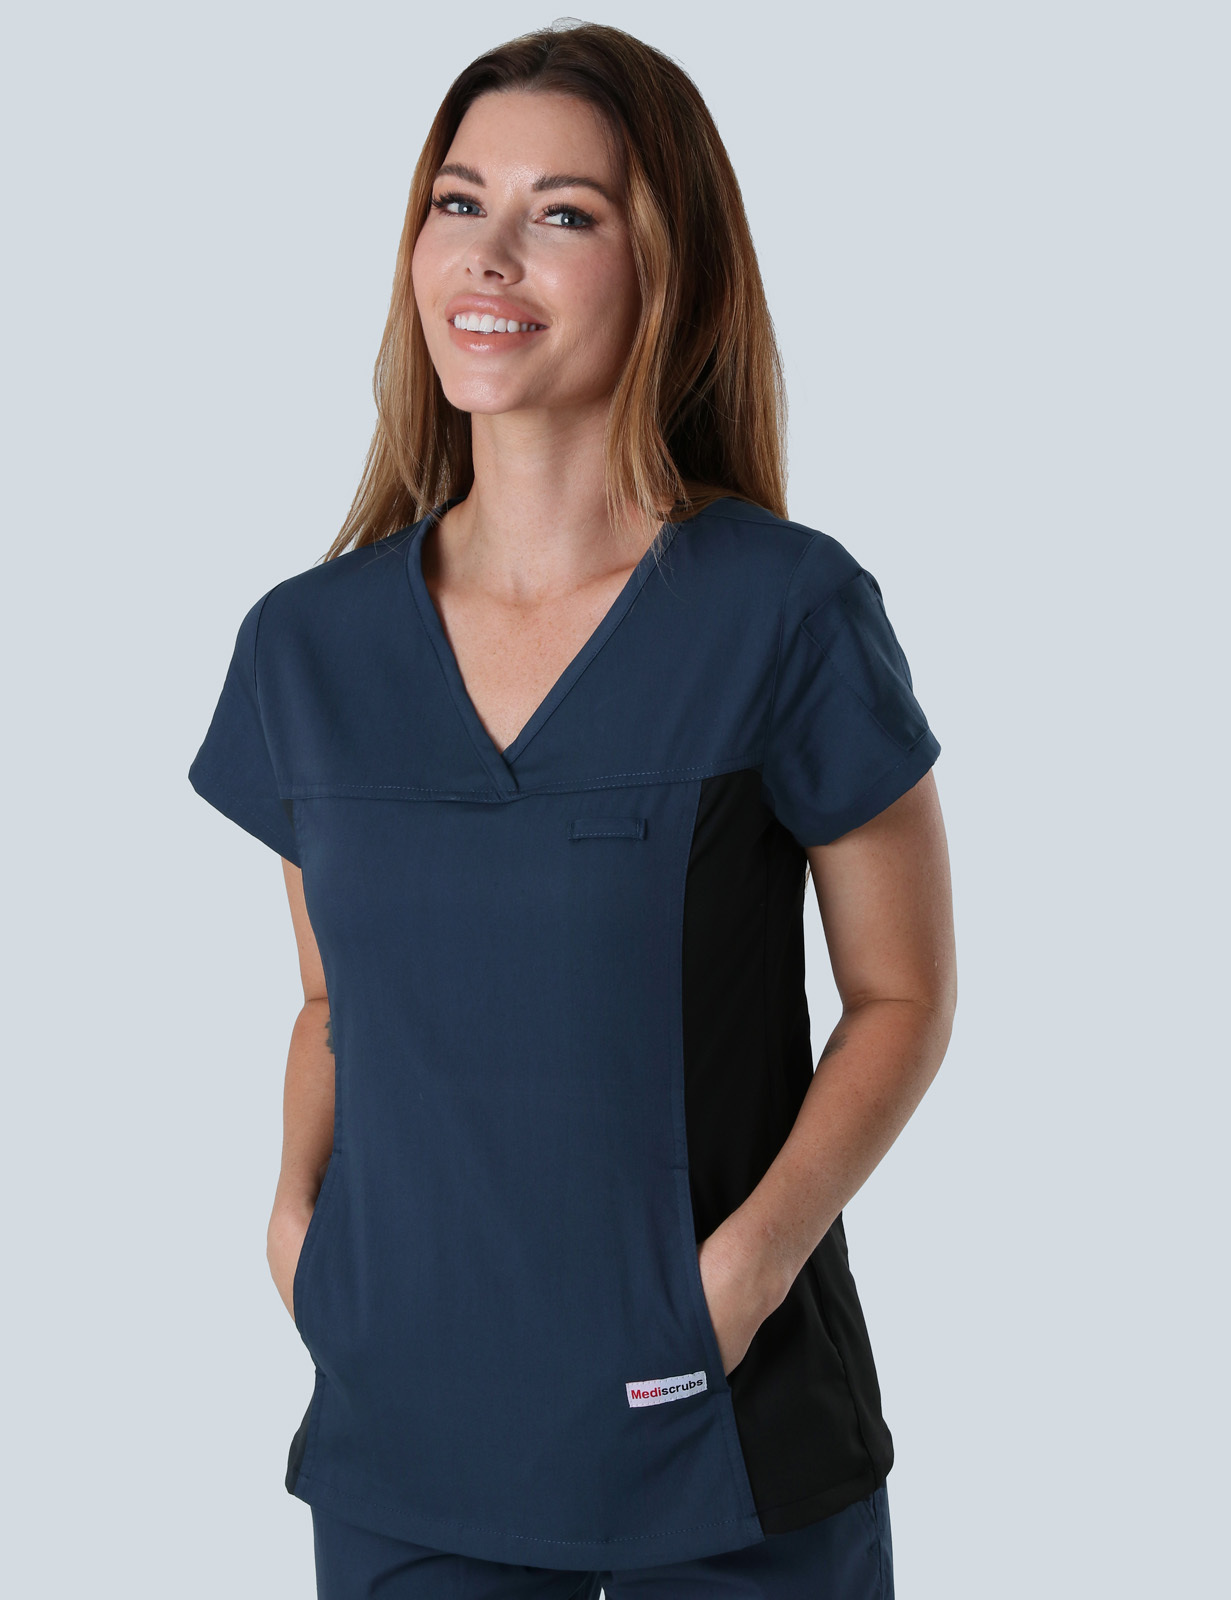 Ashmore Retreat Carer Uniform Top Only Bundle - (Women's Fit Spandex in Navy incl Logo) 